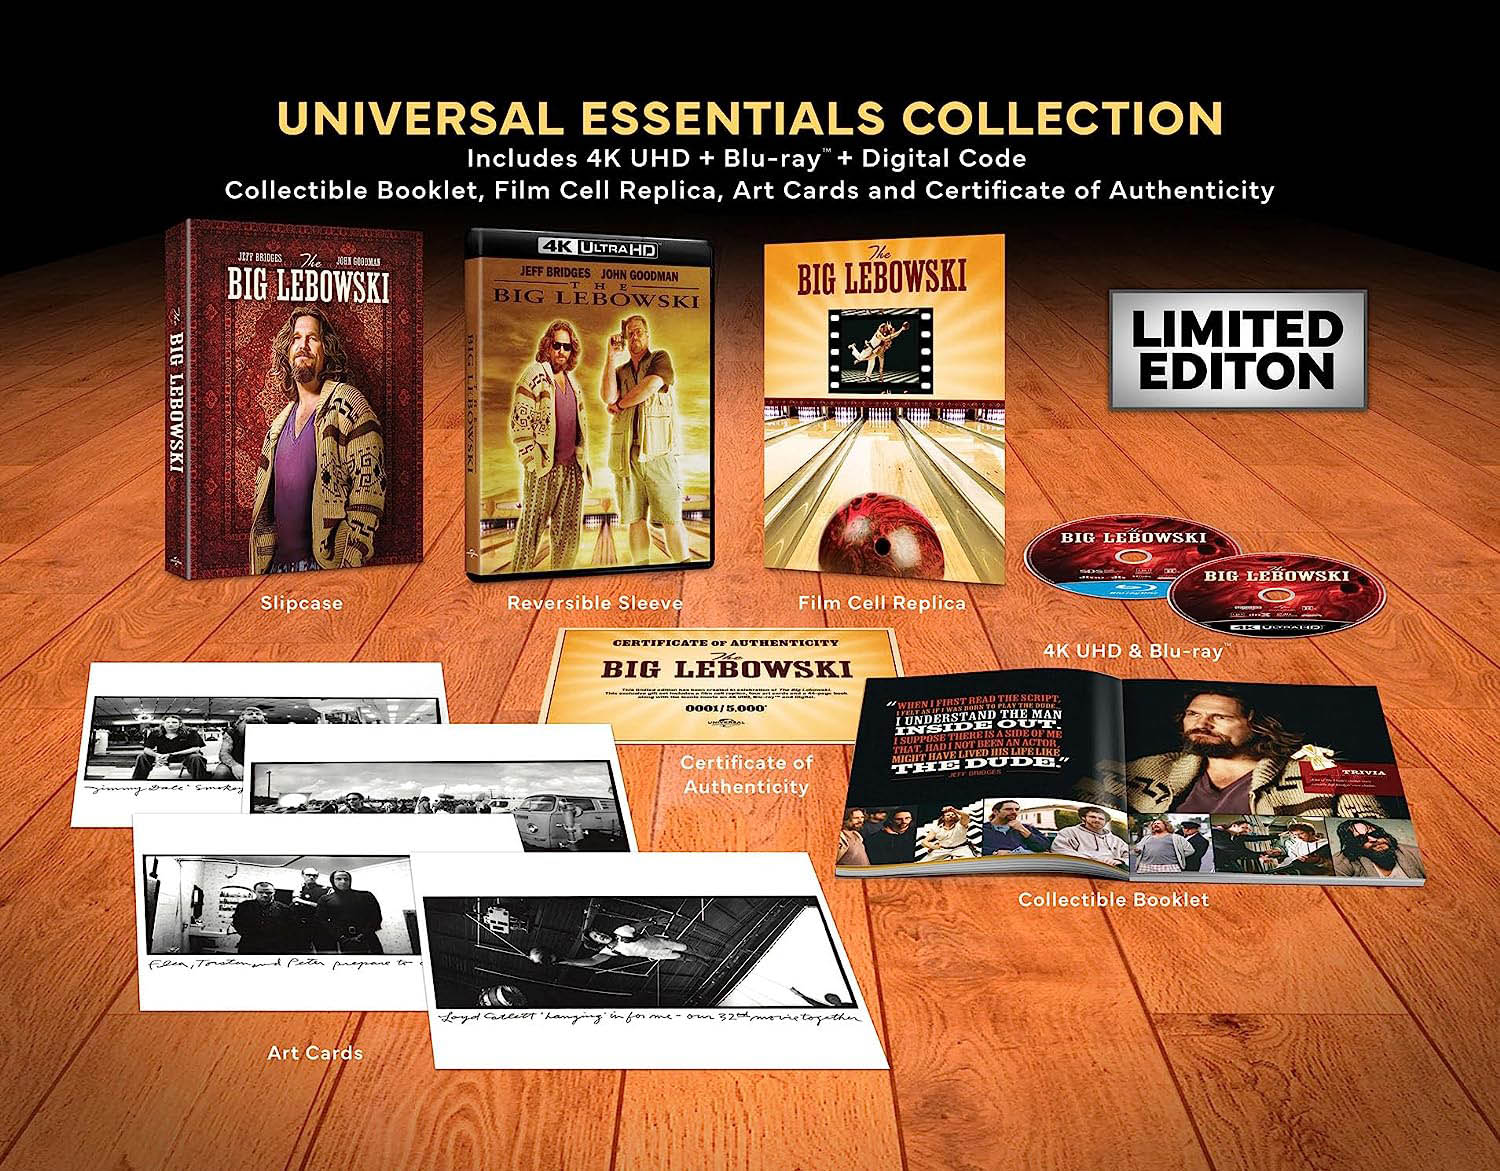 The Big Lebowski "Universal Essentials Collection" 